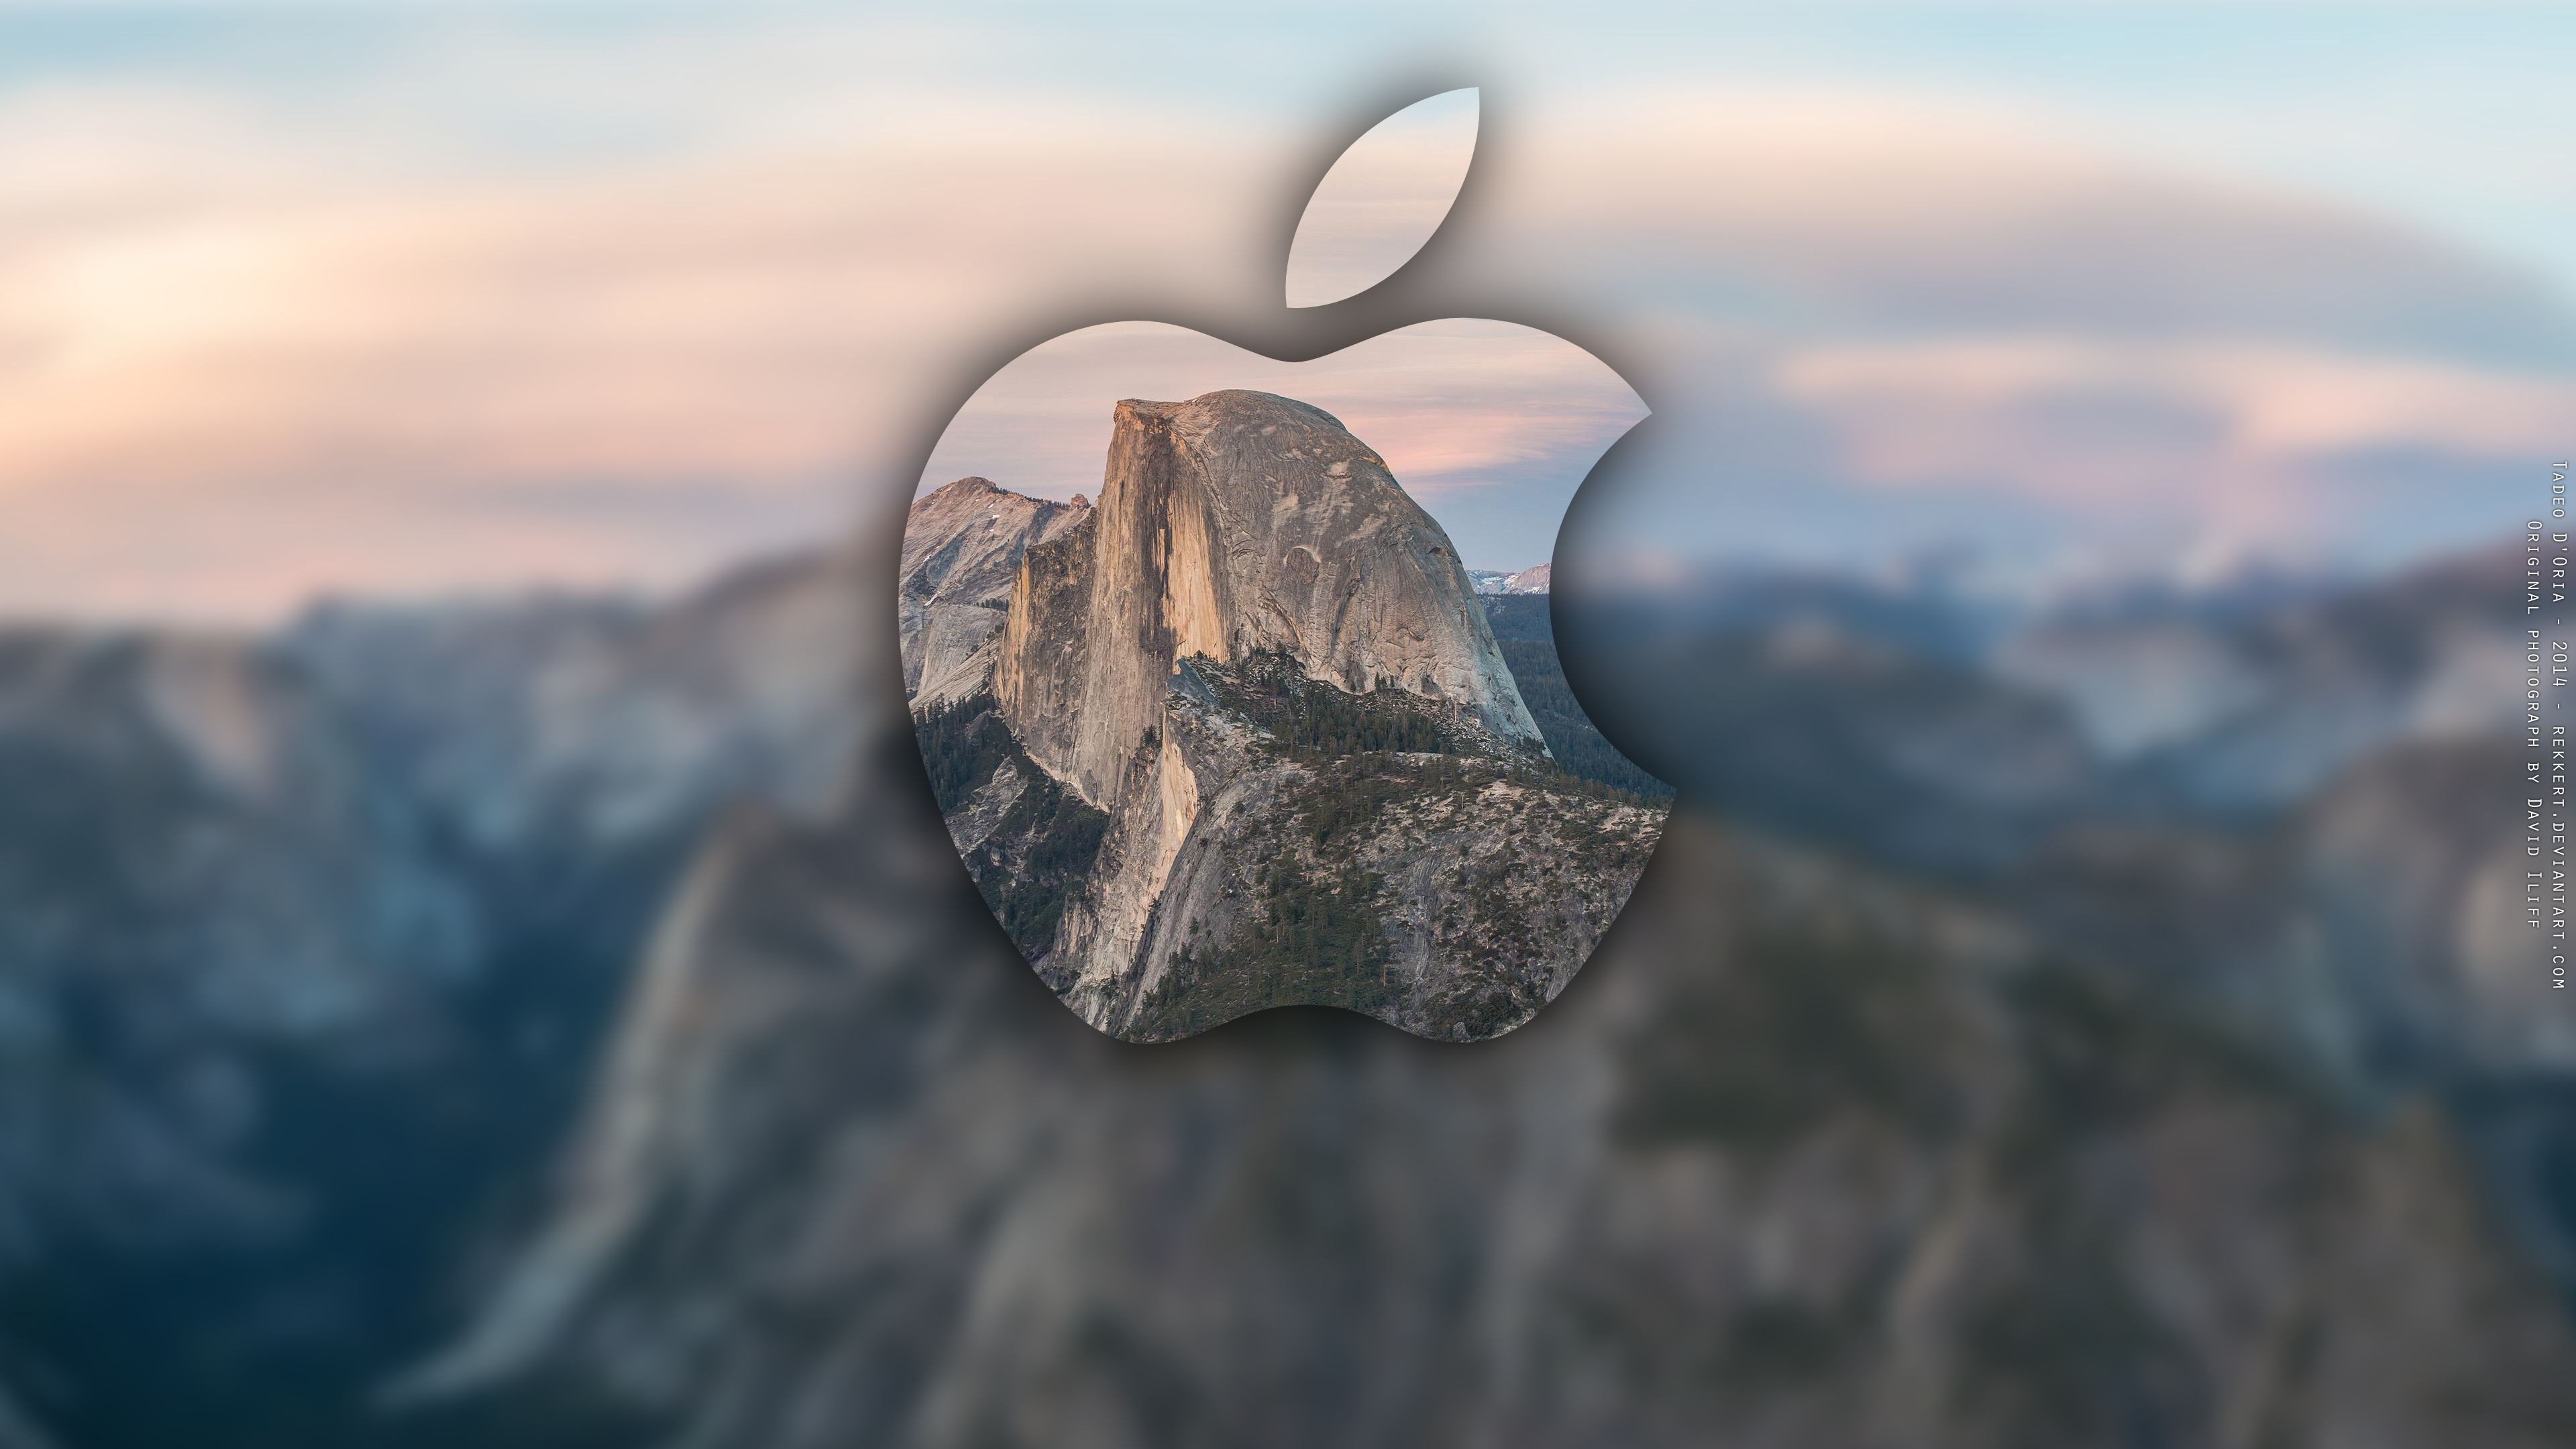 Openoffice Download For Mac Yosemite